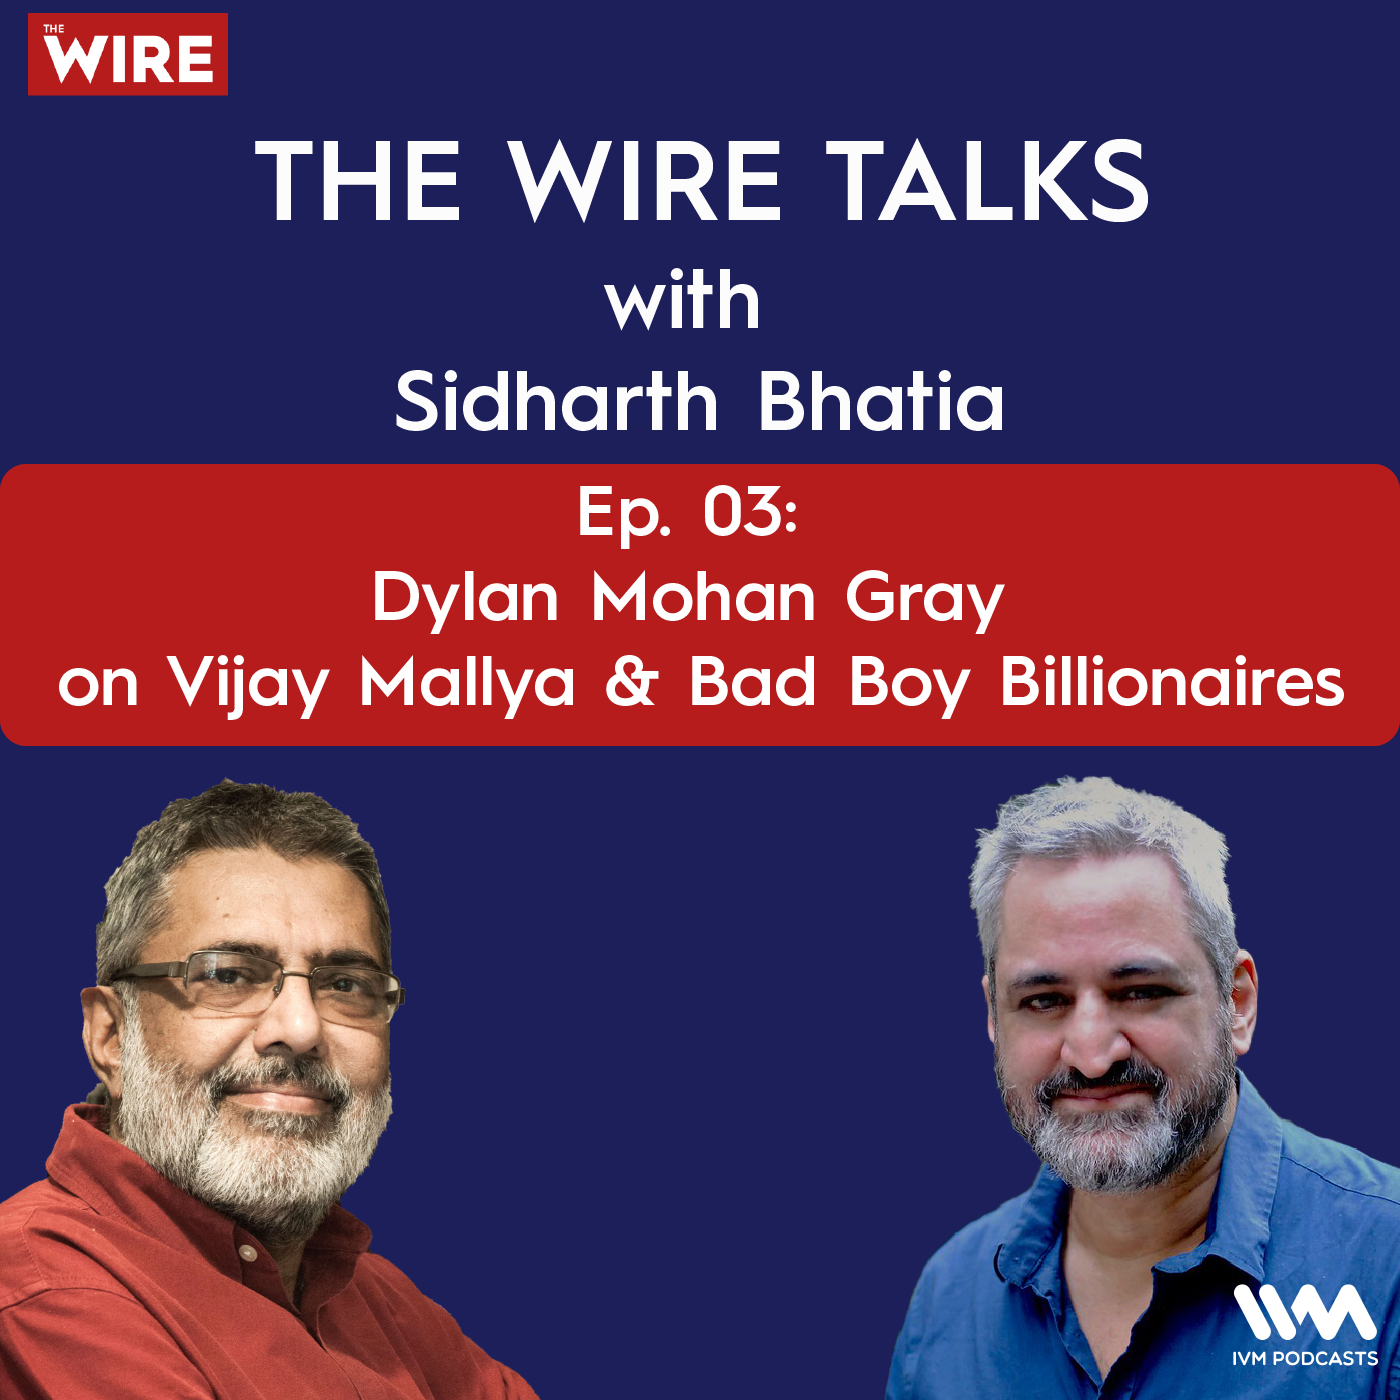 Dylan Mohan Gray on Vijay Mallya & Bad Boy Billionaires